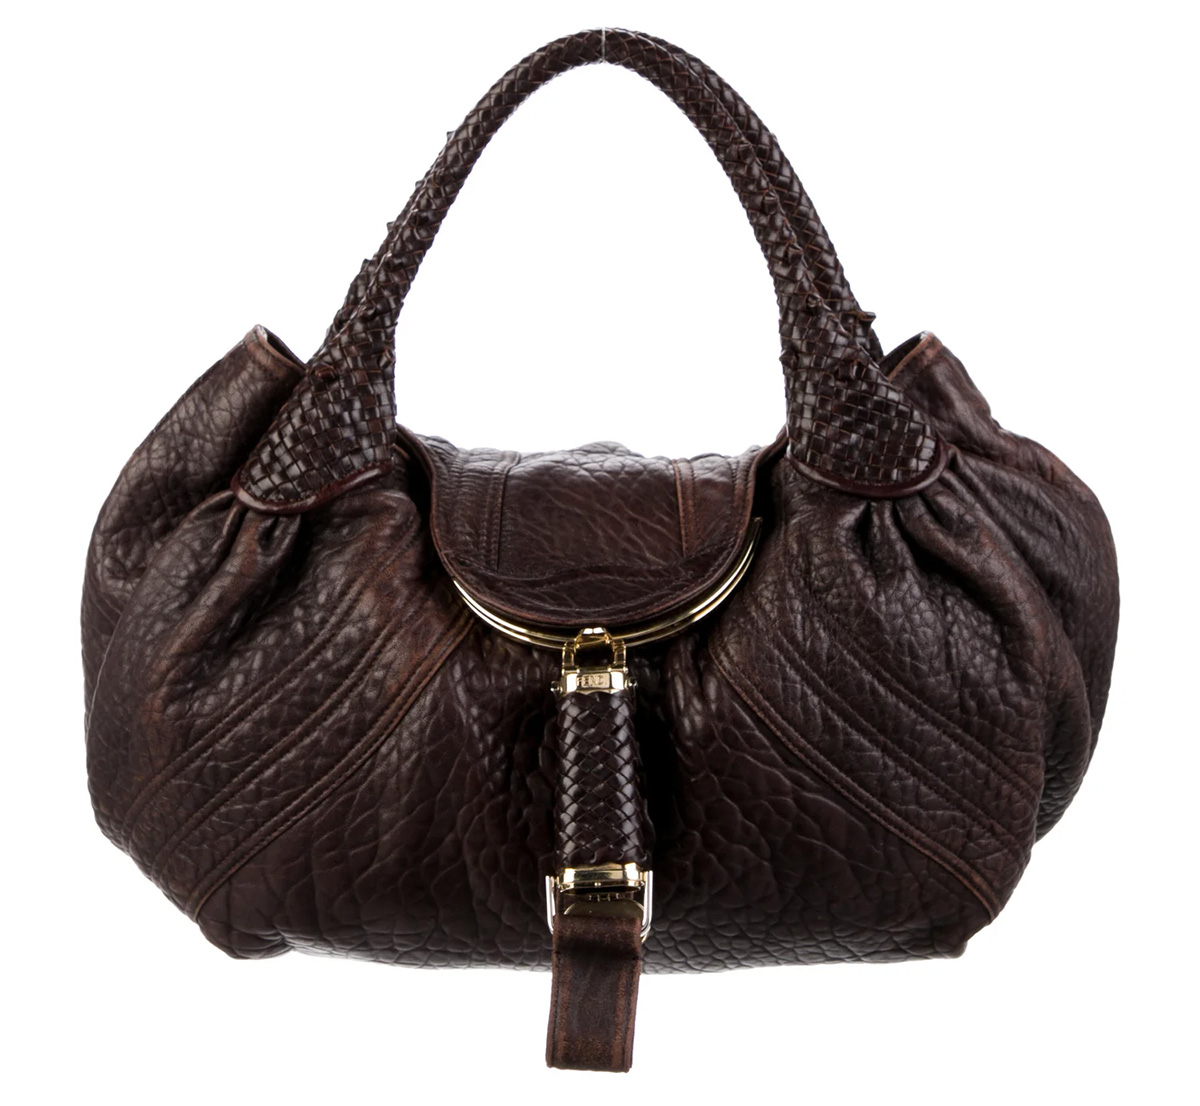 New Fendi Spy Bags - PurseBlog  Fendi spy bag, Fendi, Leather fashion